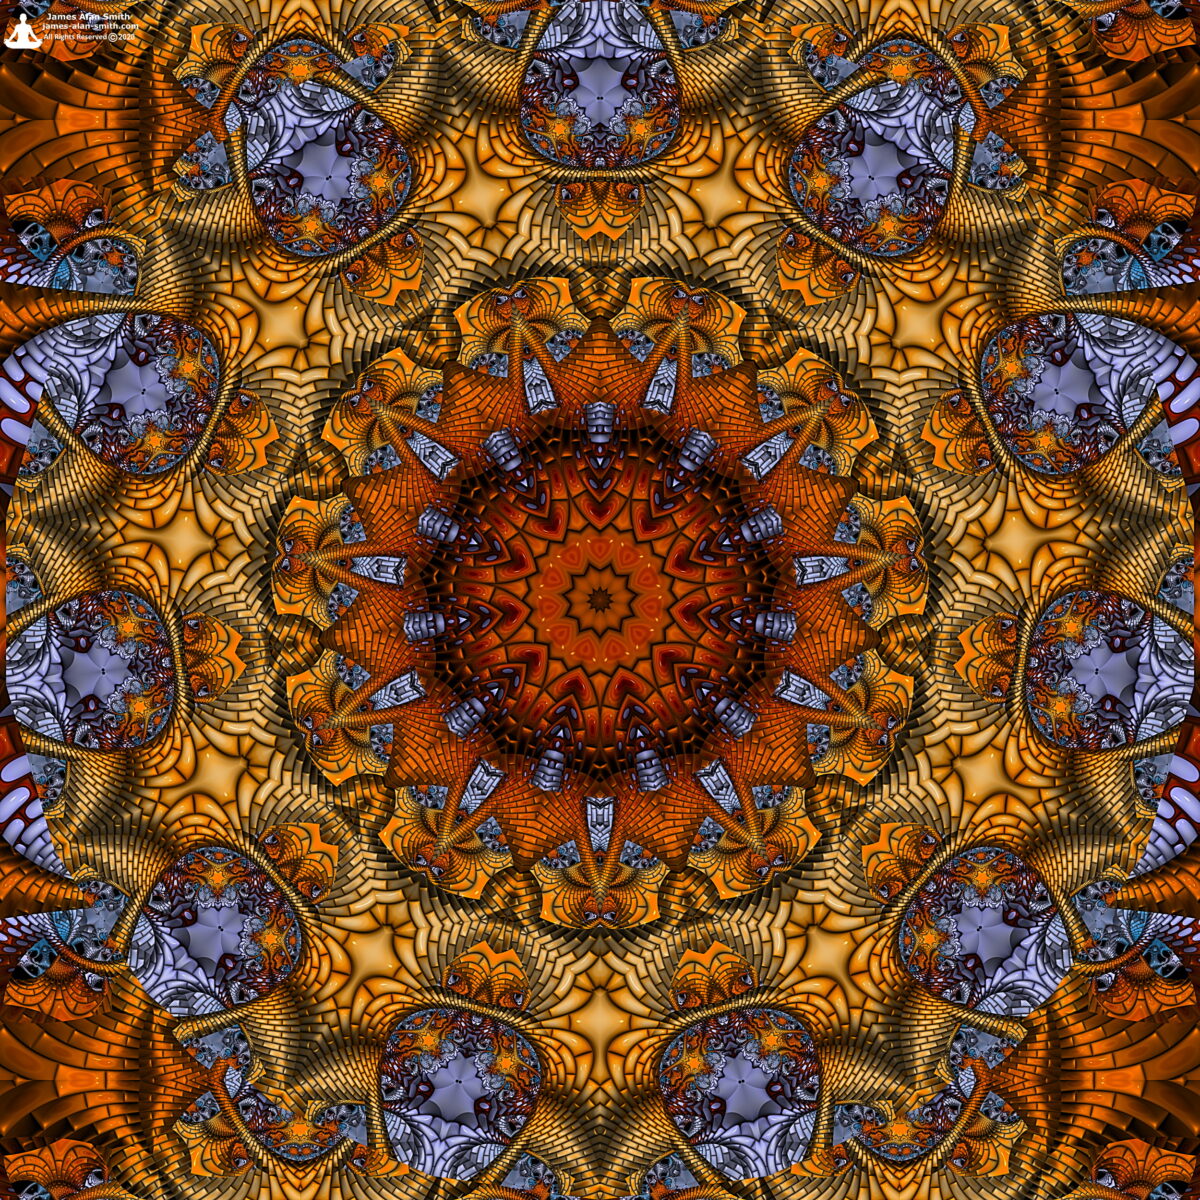 Unusual Mandala Series #05232020: Artwork by James Alan Smith